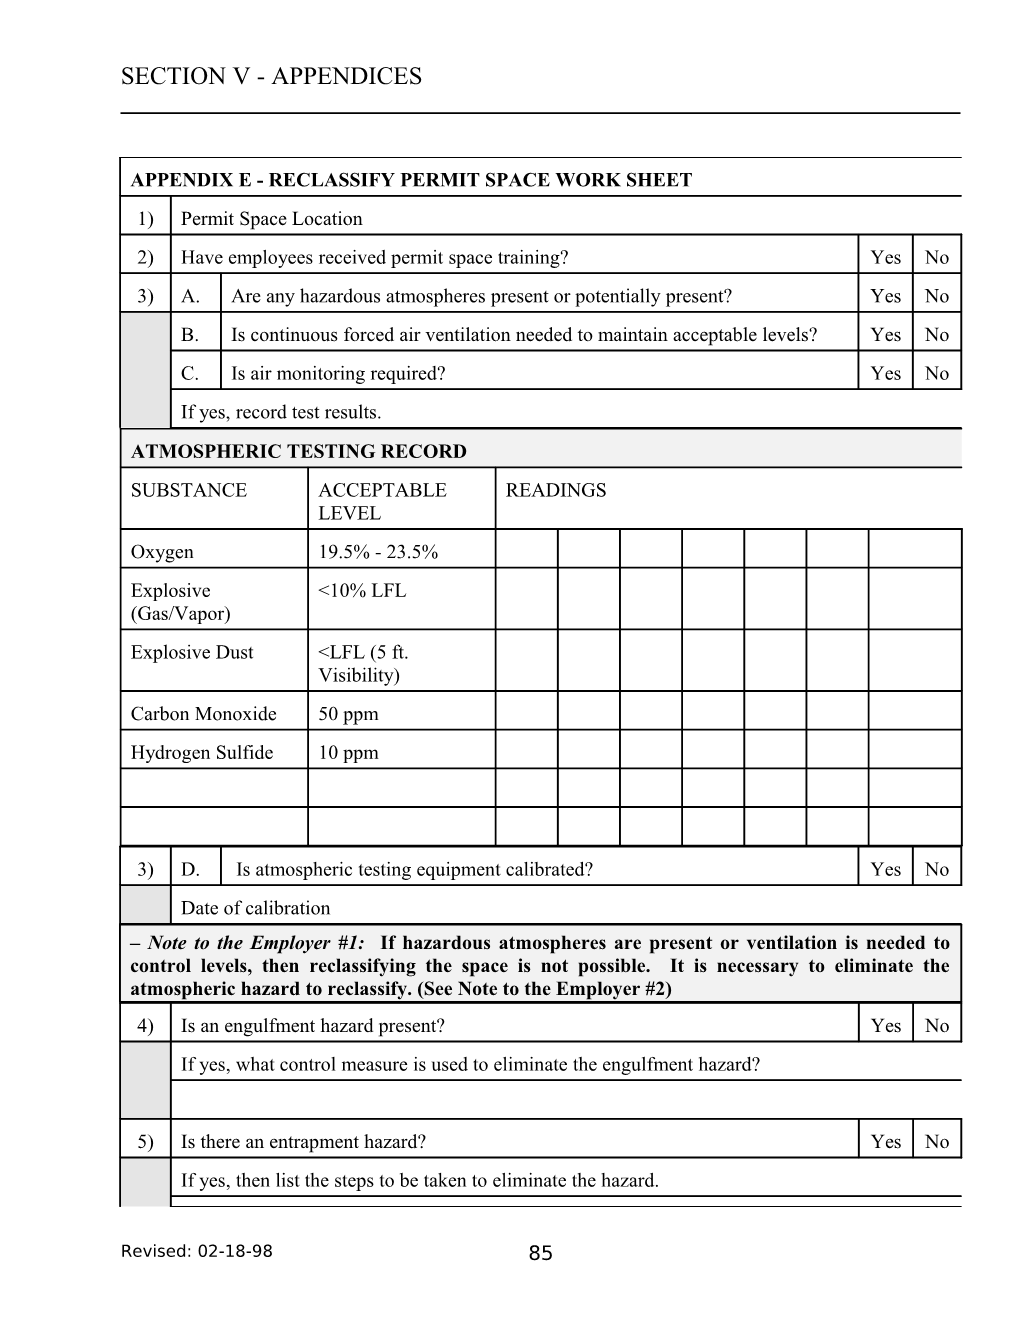 Appendix E - Reclassify Permit Space Work Sheet